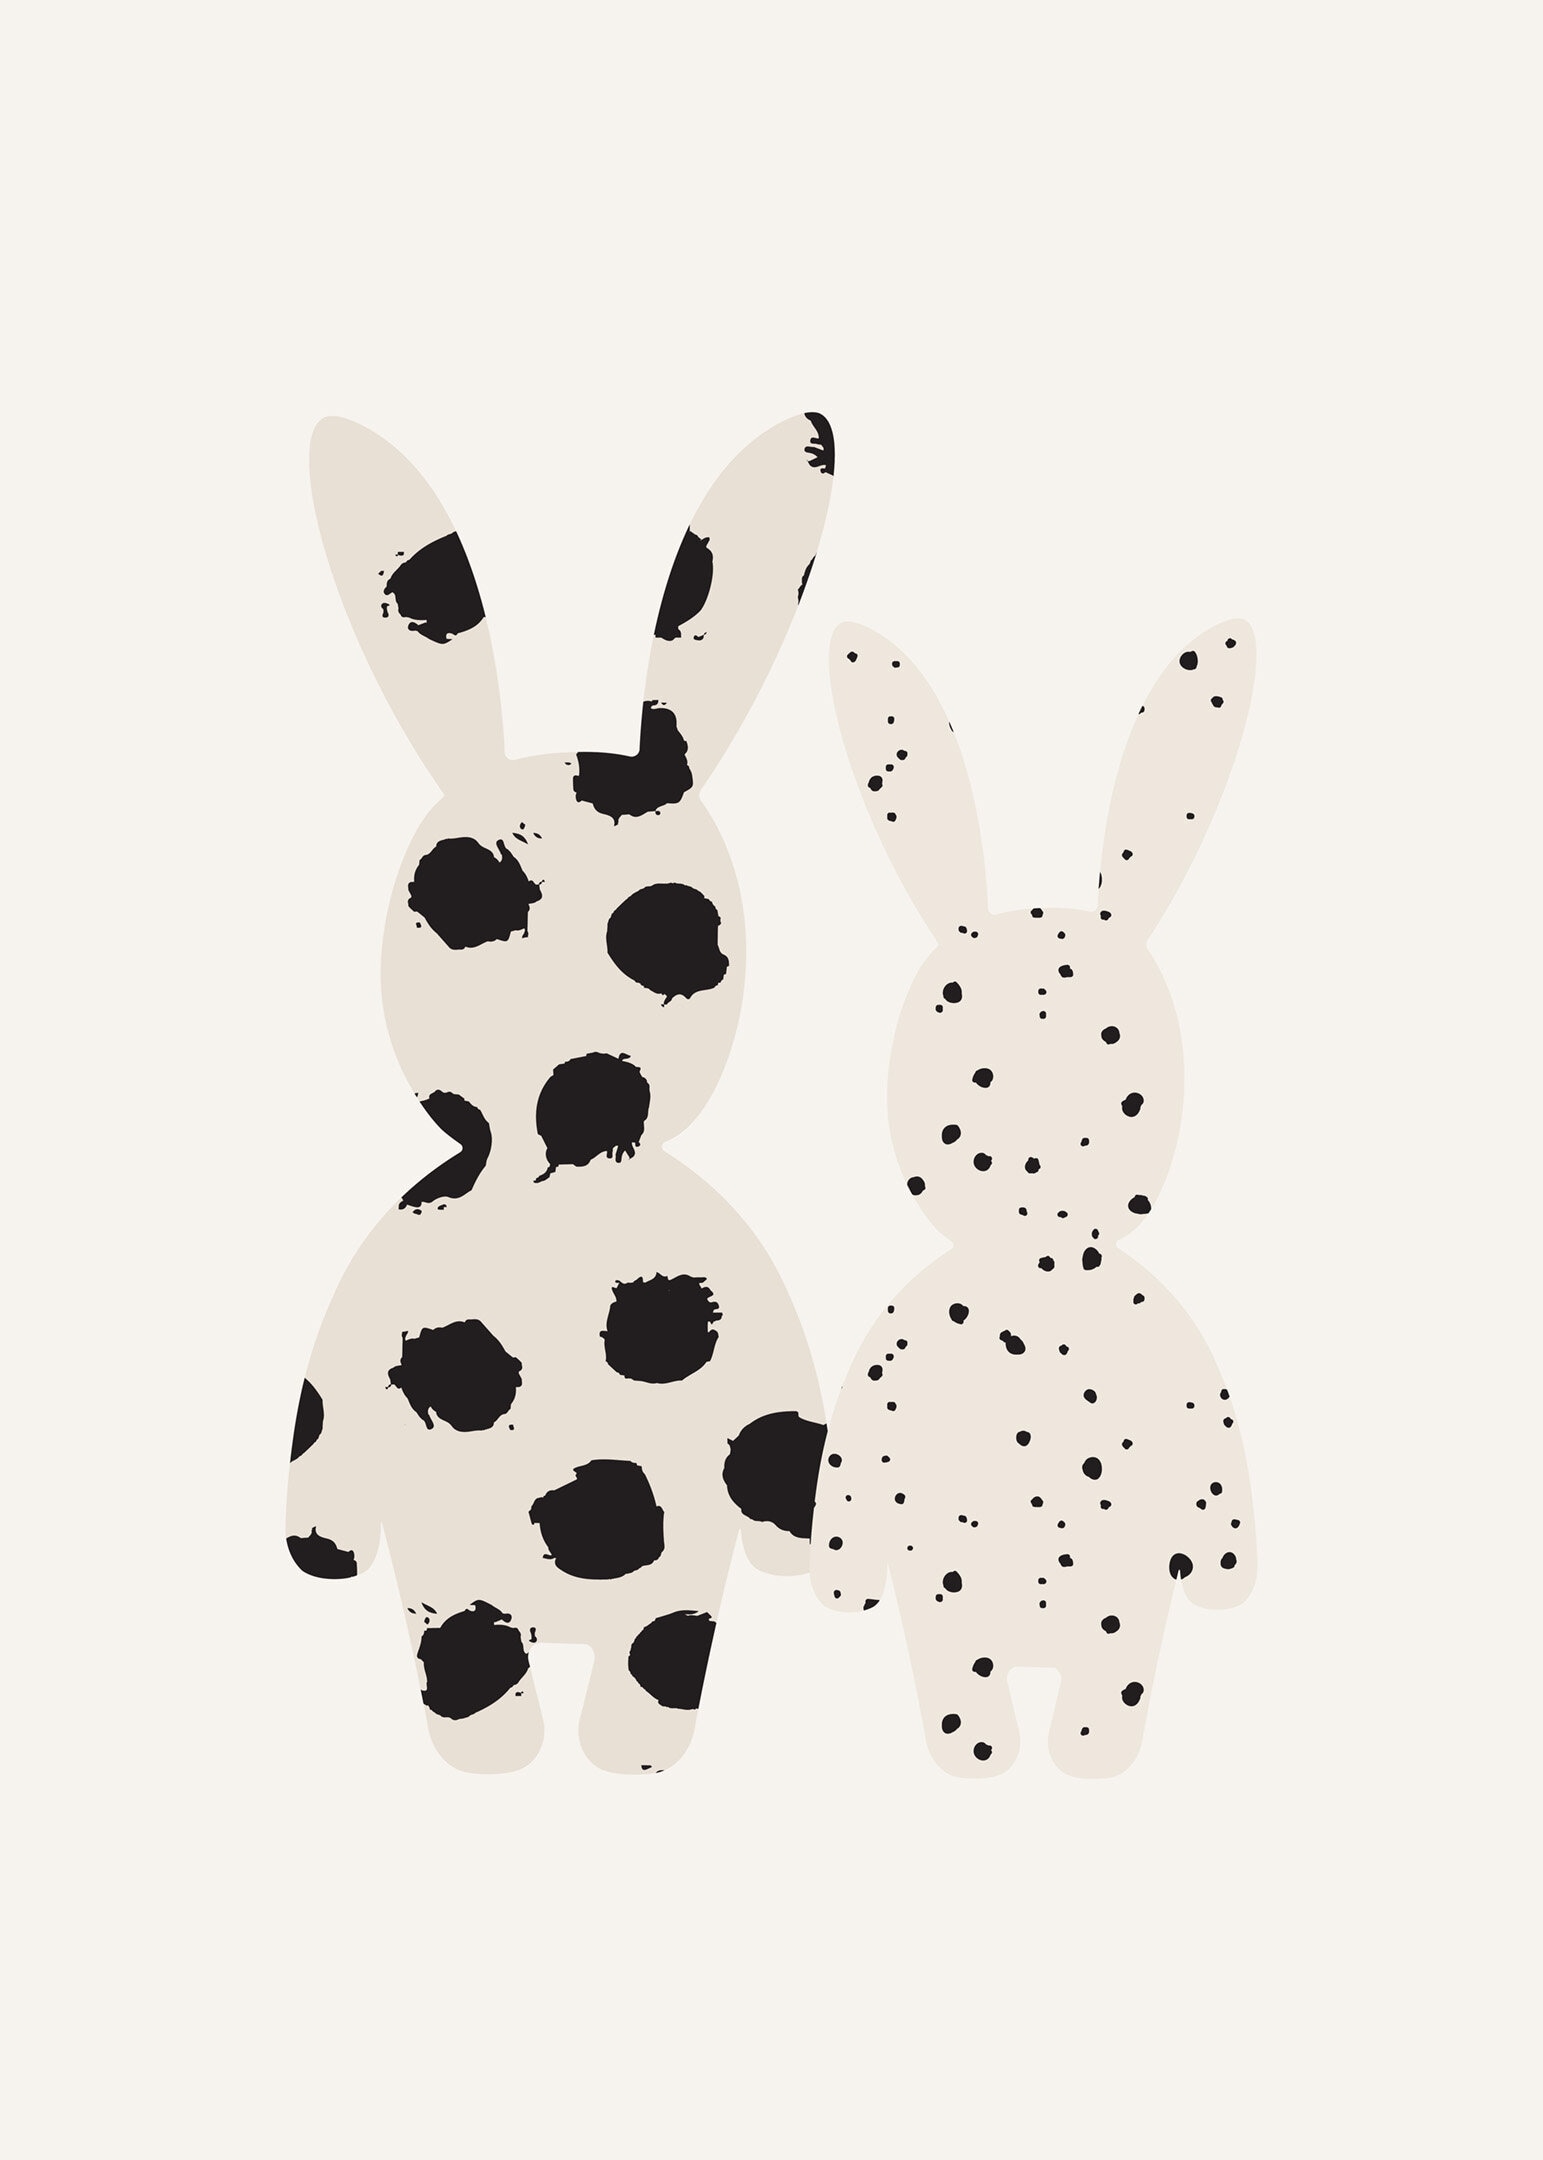 Bunny buddies poster